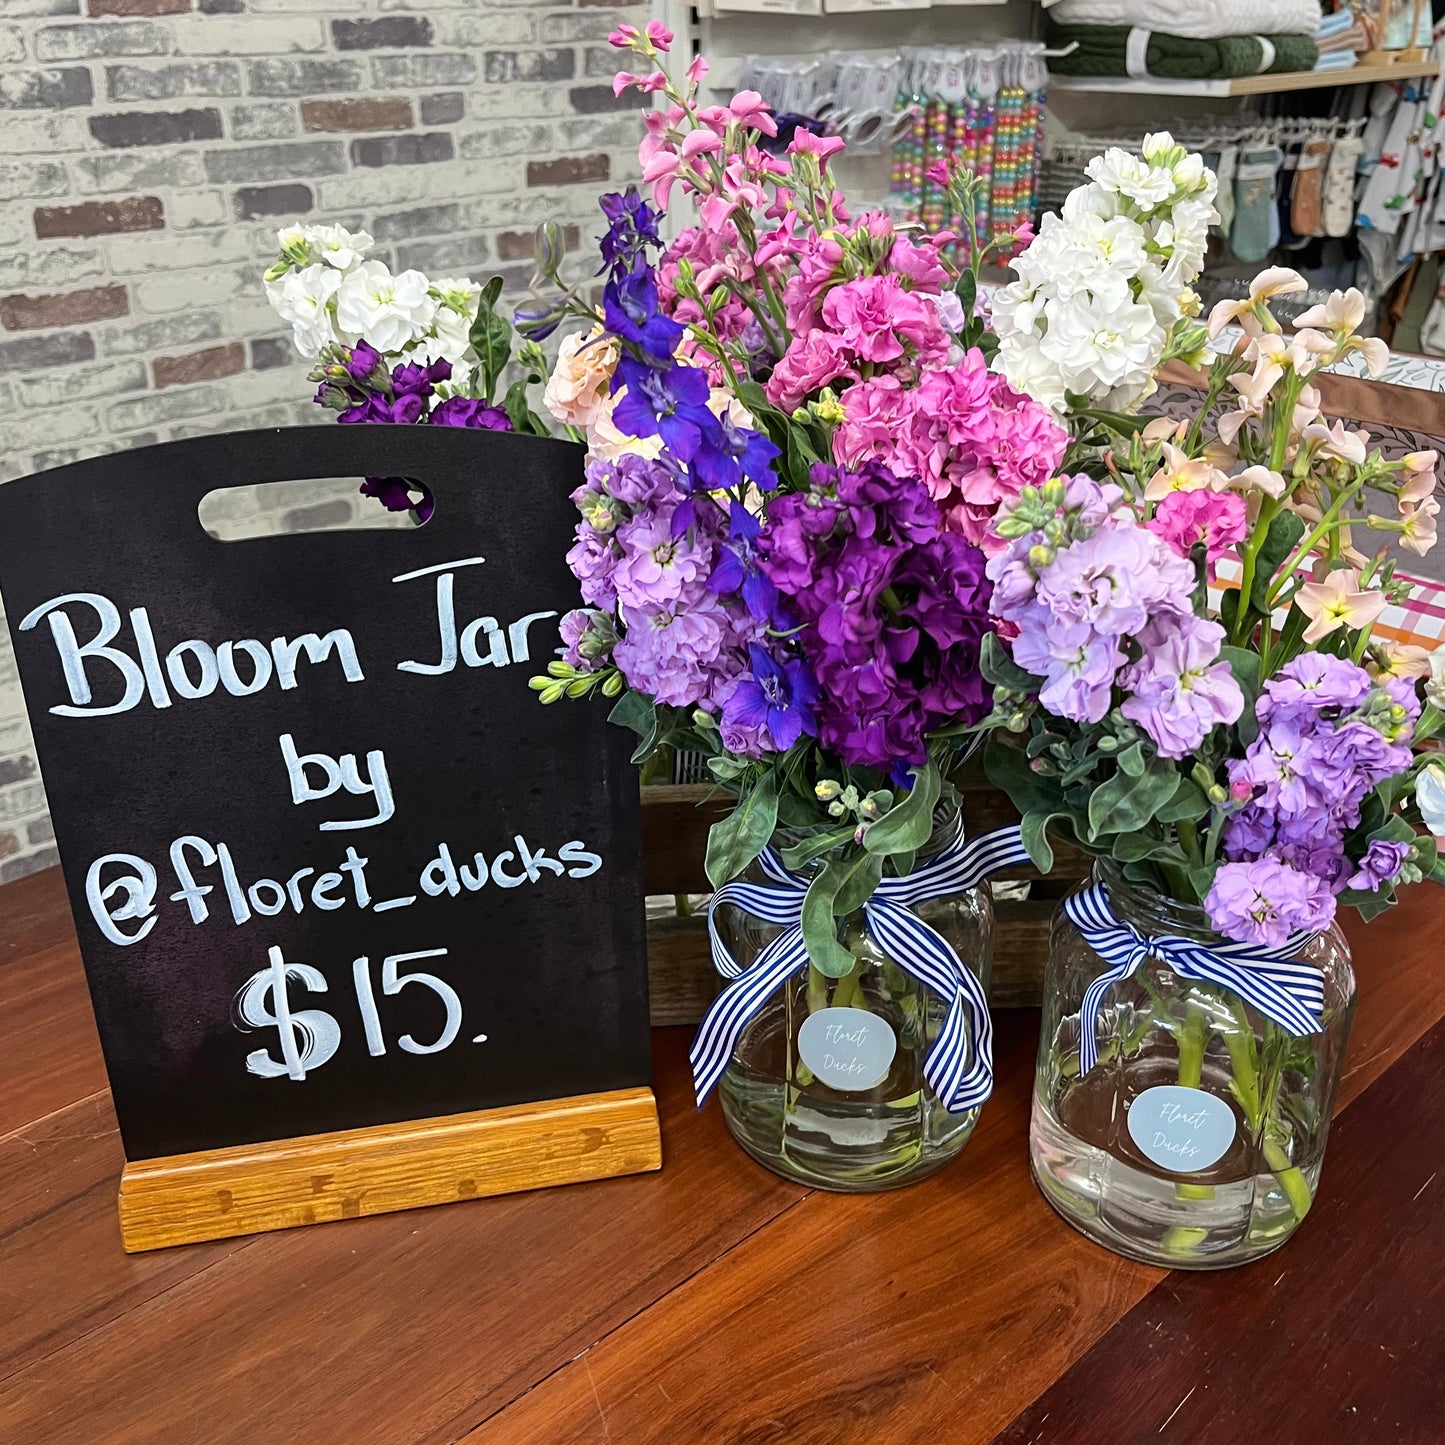 Bloom Jars